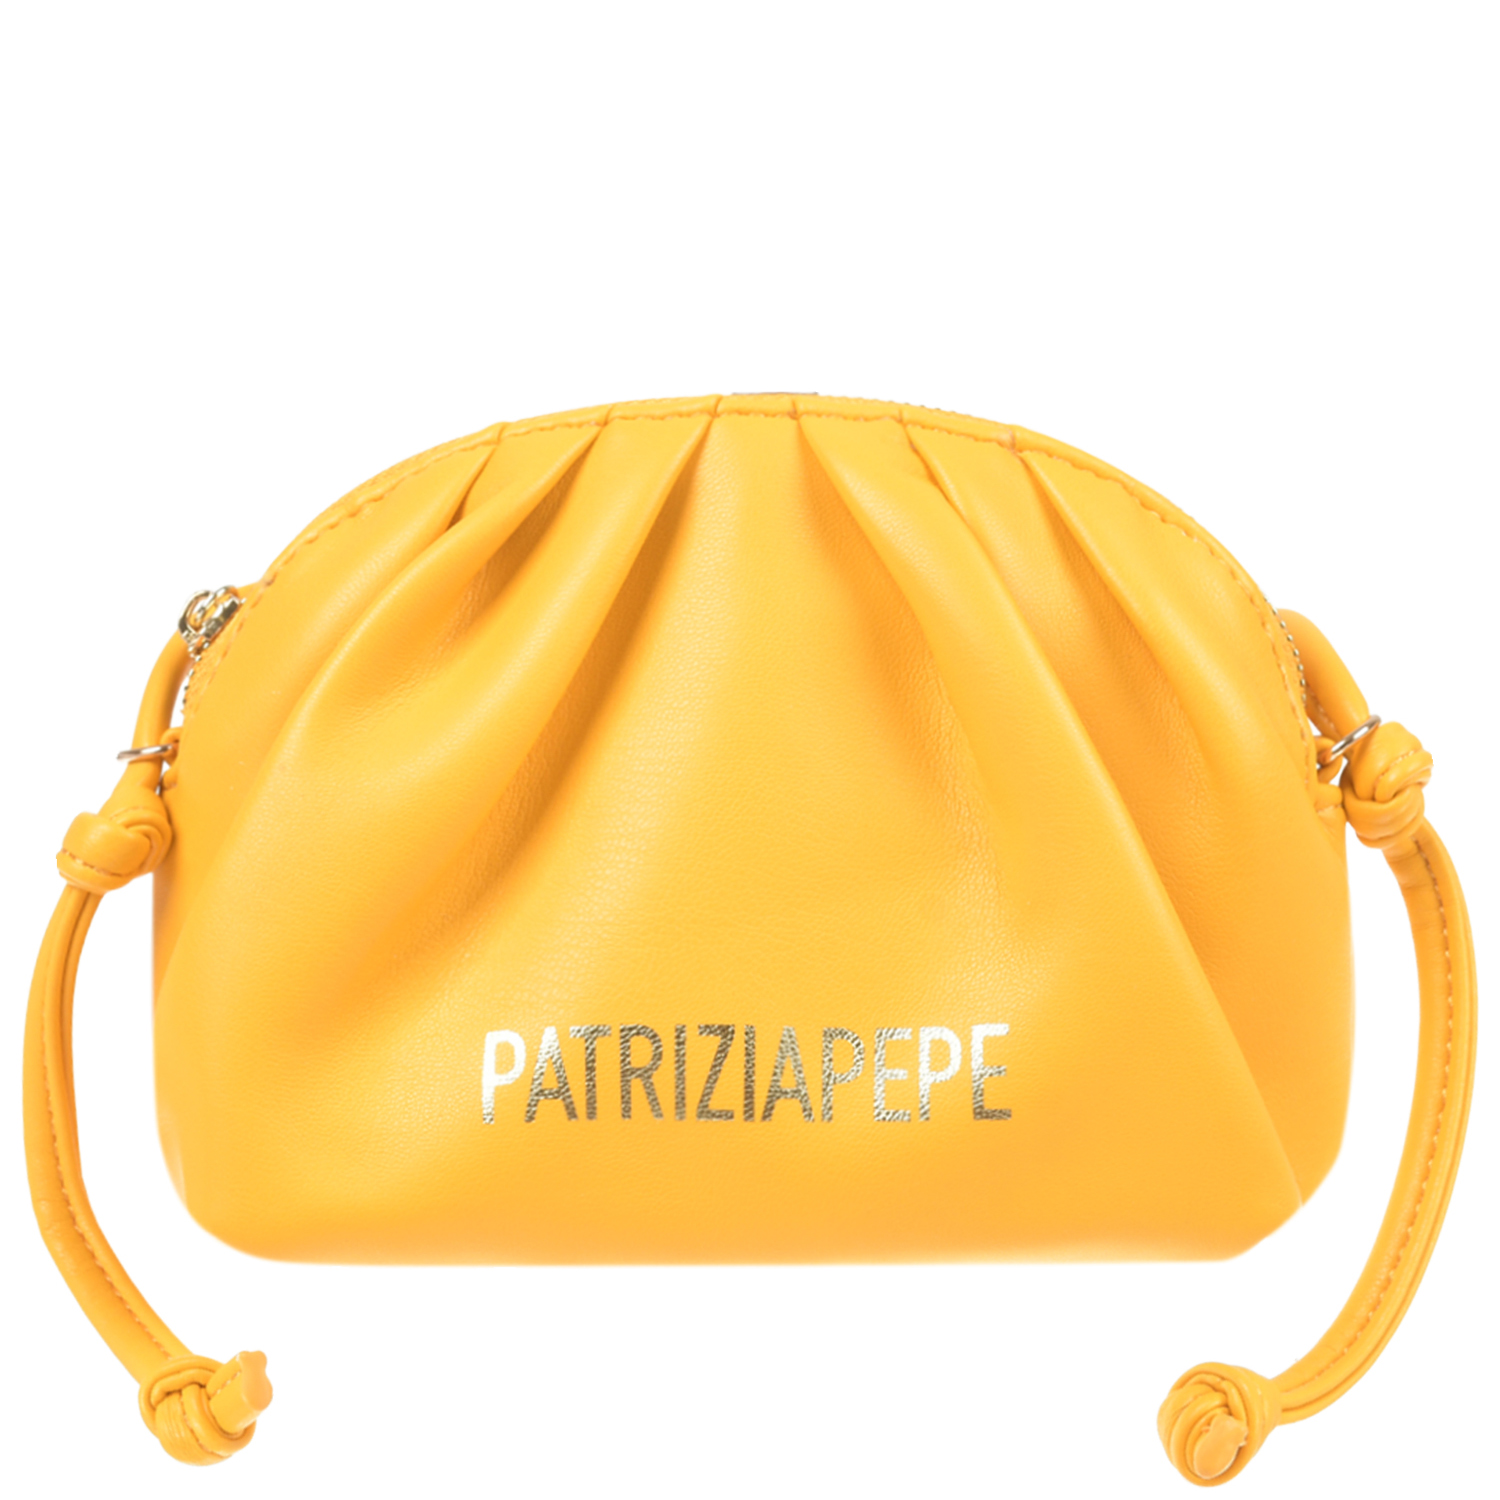 Оранжевая сумка с лого, 20x12x6 см Patrizia Pepe cумка а фуксии с лого 20x12x6 см patrizia pepe